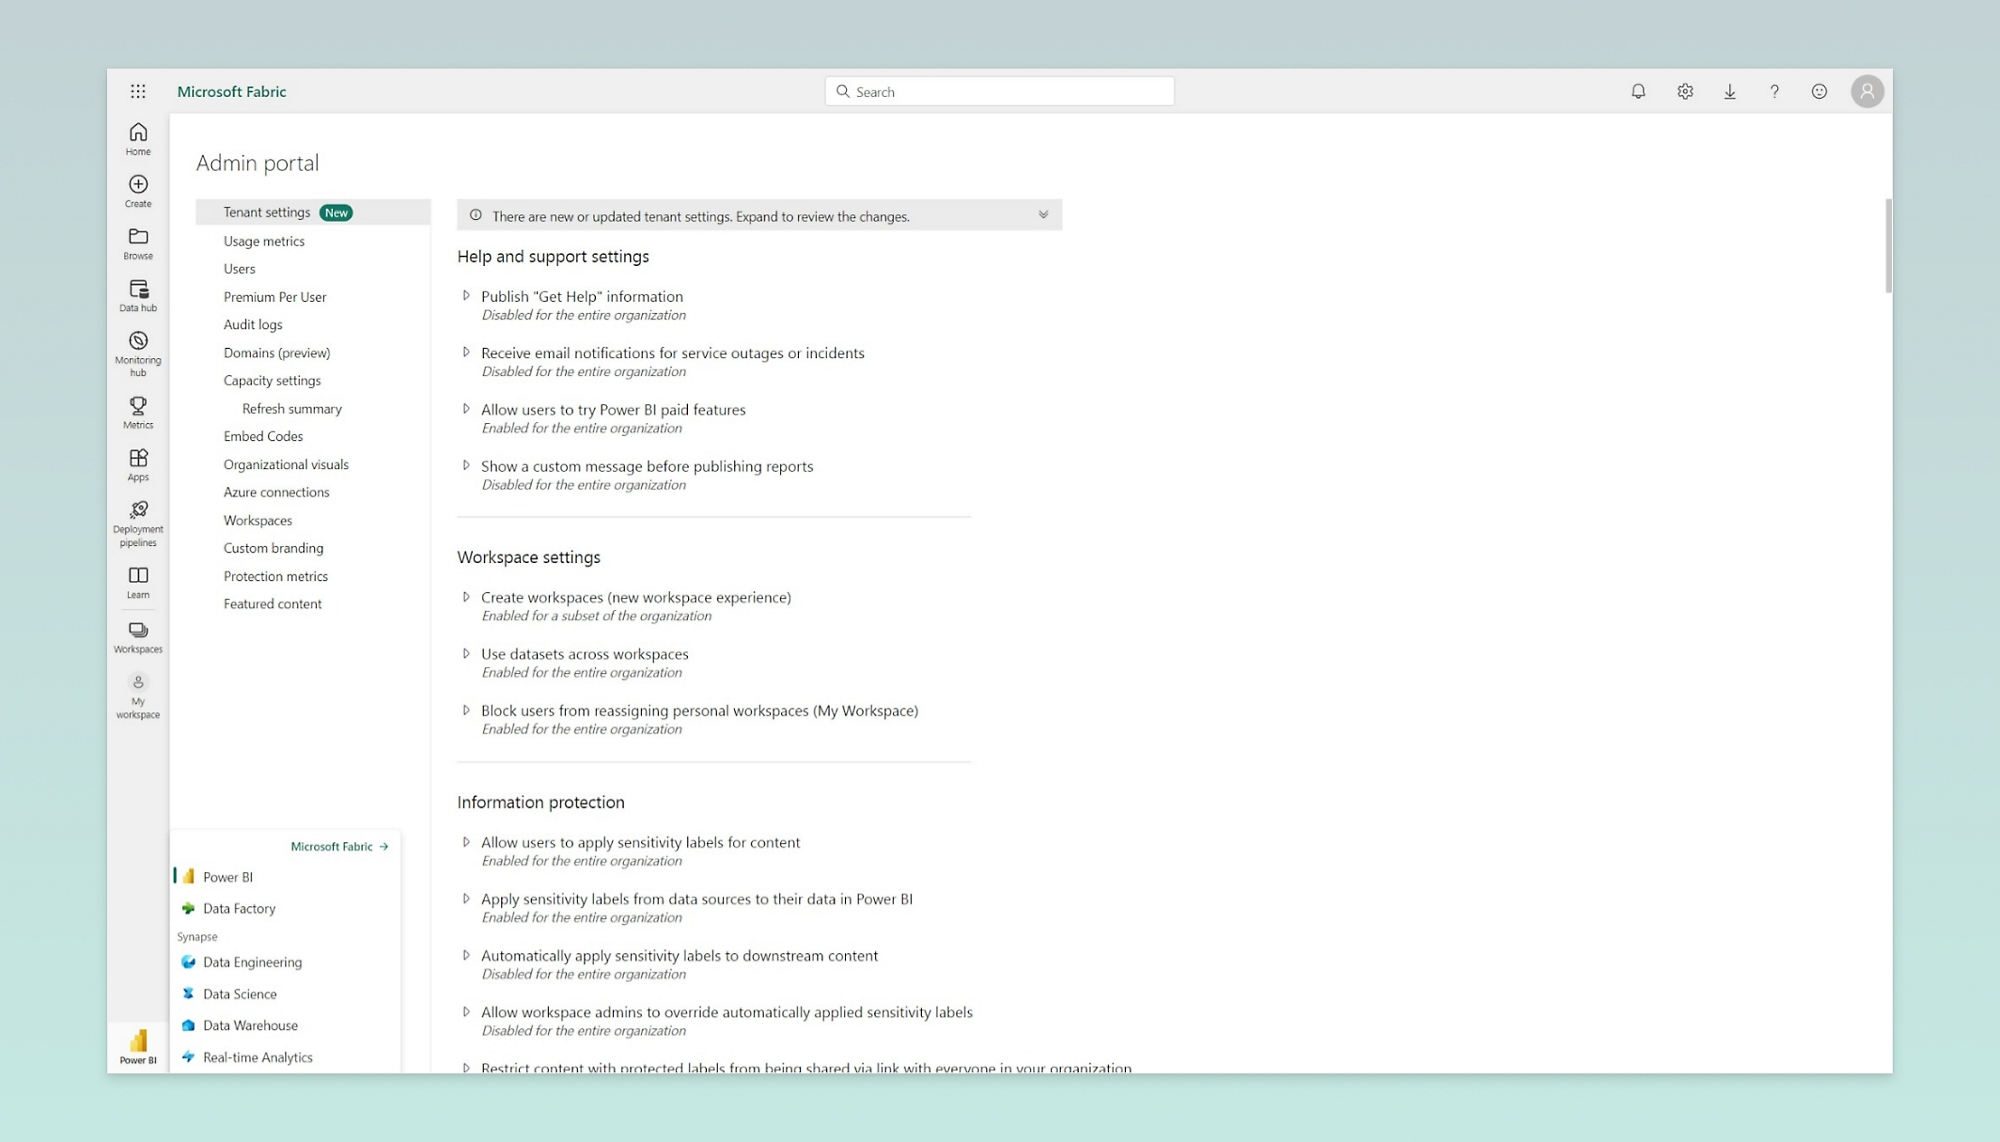 Tenant settings in the Admin portal in Microsoft Fabric